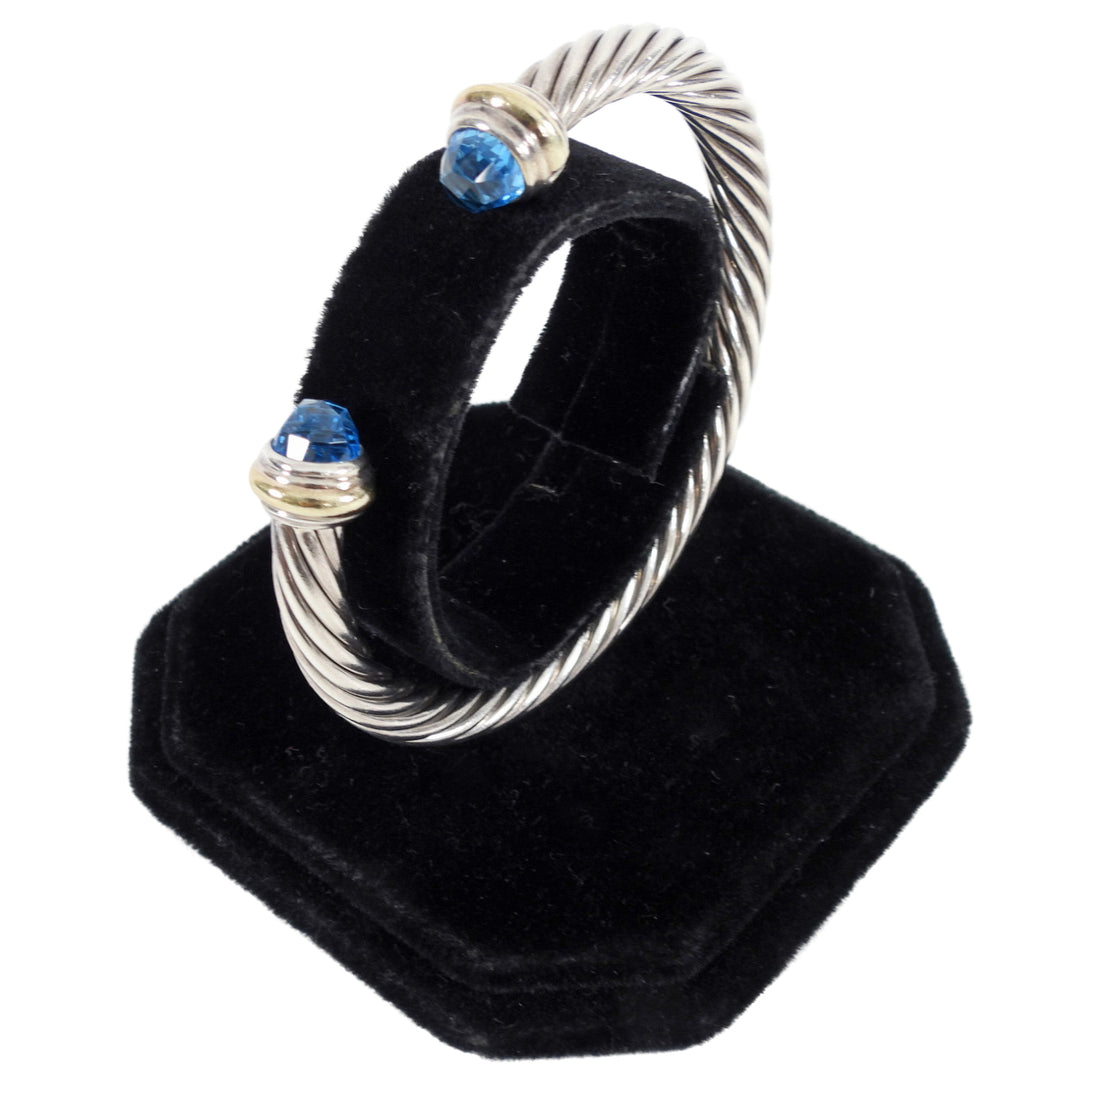 David Yurman Sterling 14k Classic Cable Blue Topaz Bracelet